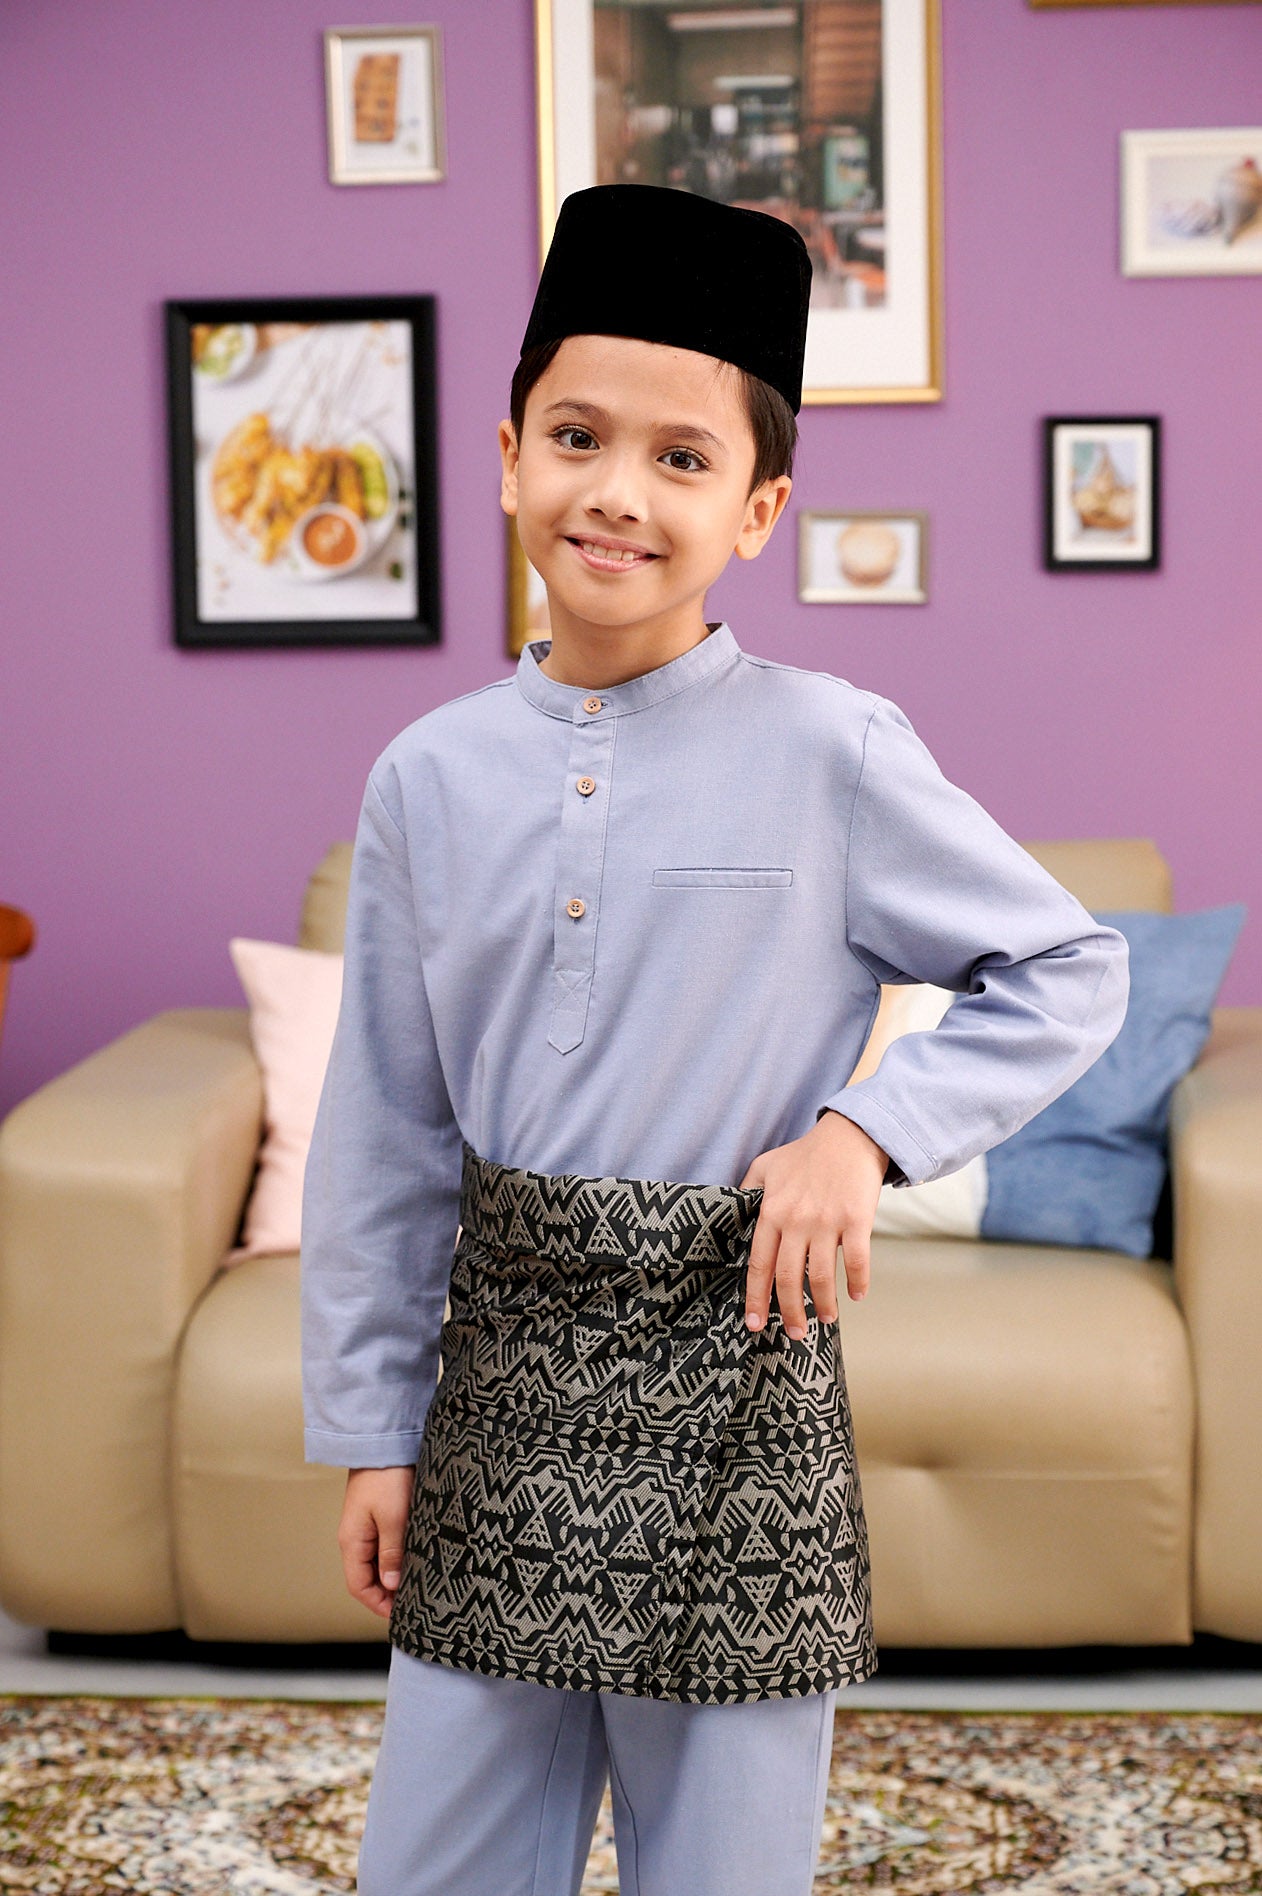 The Kenangan Raya Boy Baju Melayu Set Stone Blue